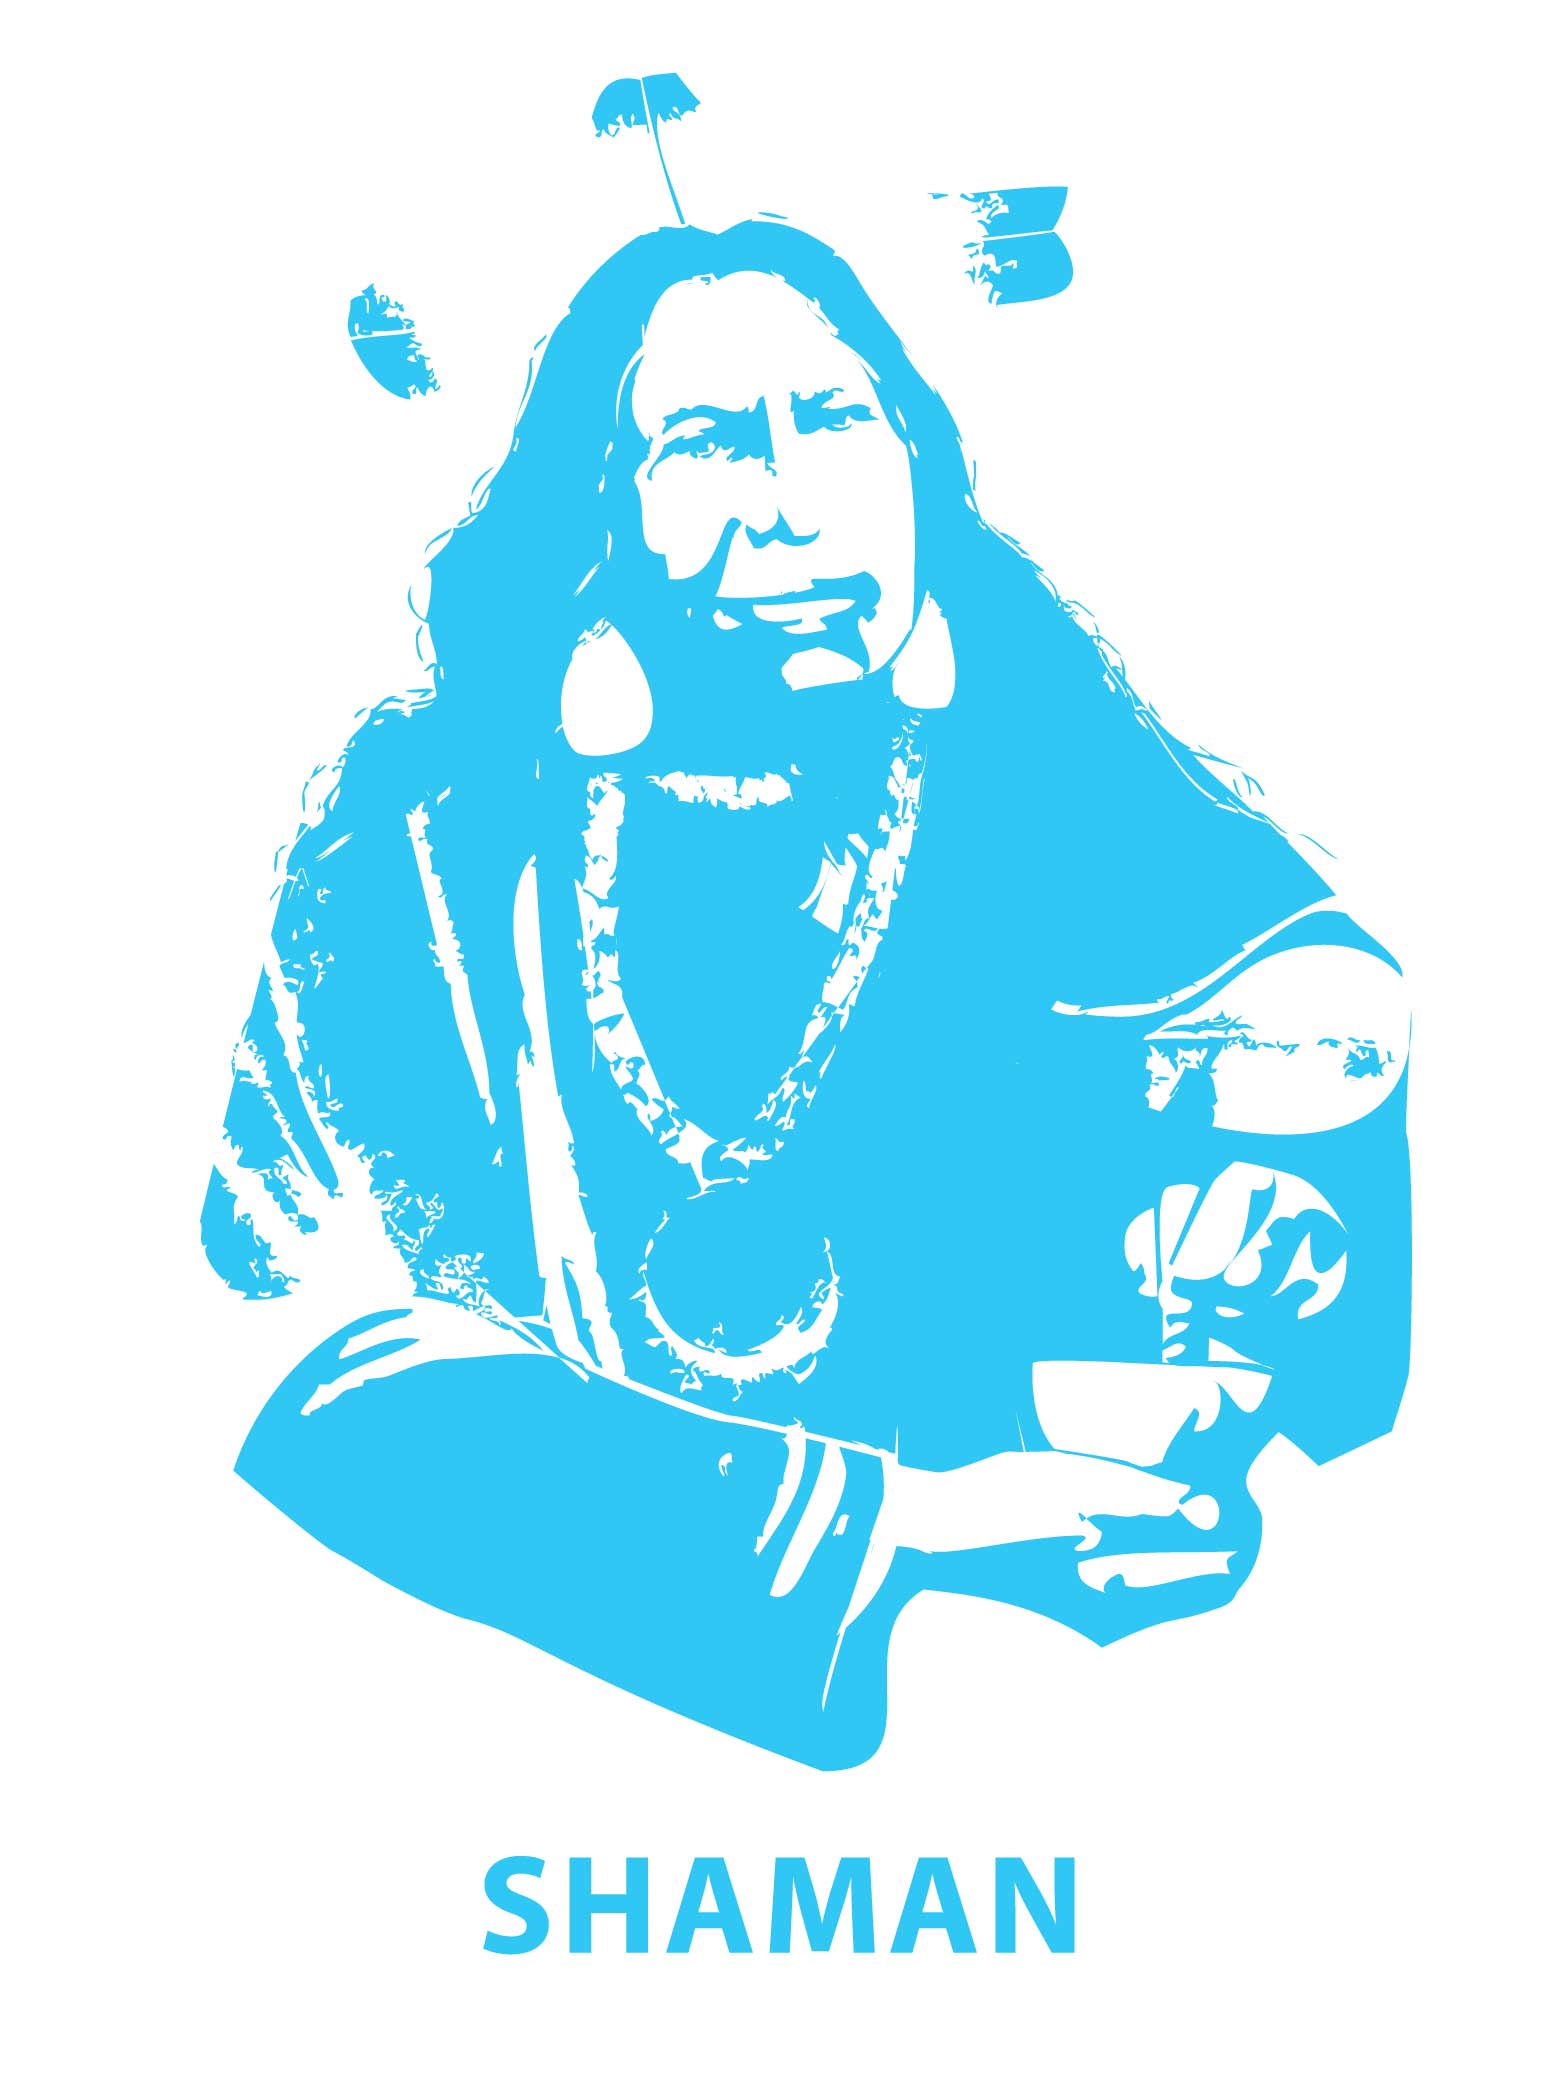 Illustration of Shaman by NFT Latinx/Womnx decolonizing artist